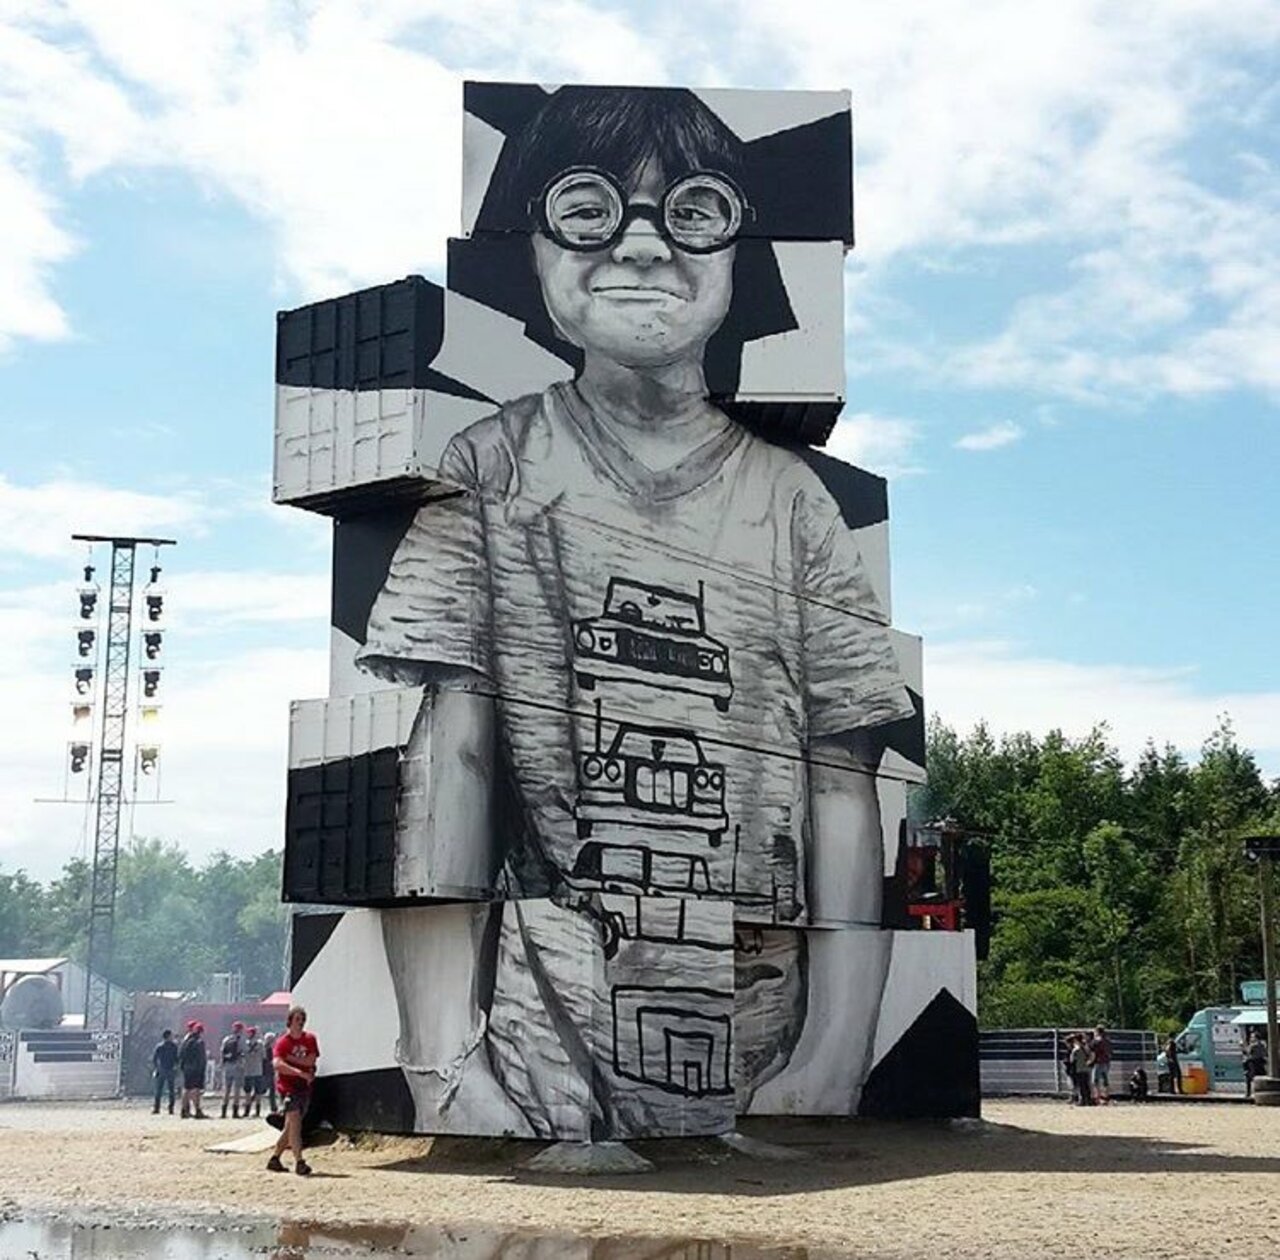 New Street Art by Alexandre Orion in Werchter, Belgium For North West Walls.#art #mural #graffiti #streetart https://t.co/4n4E3bsa4J